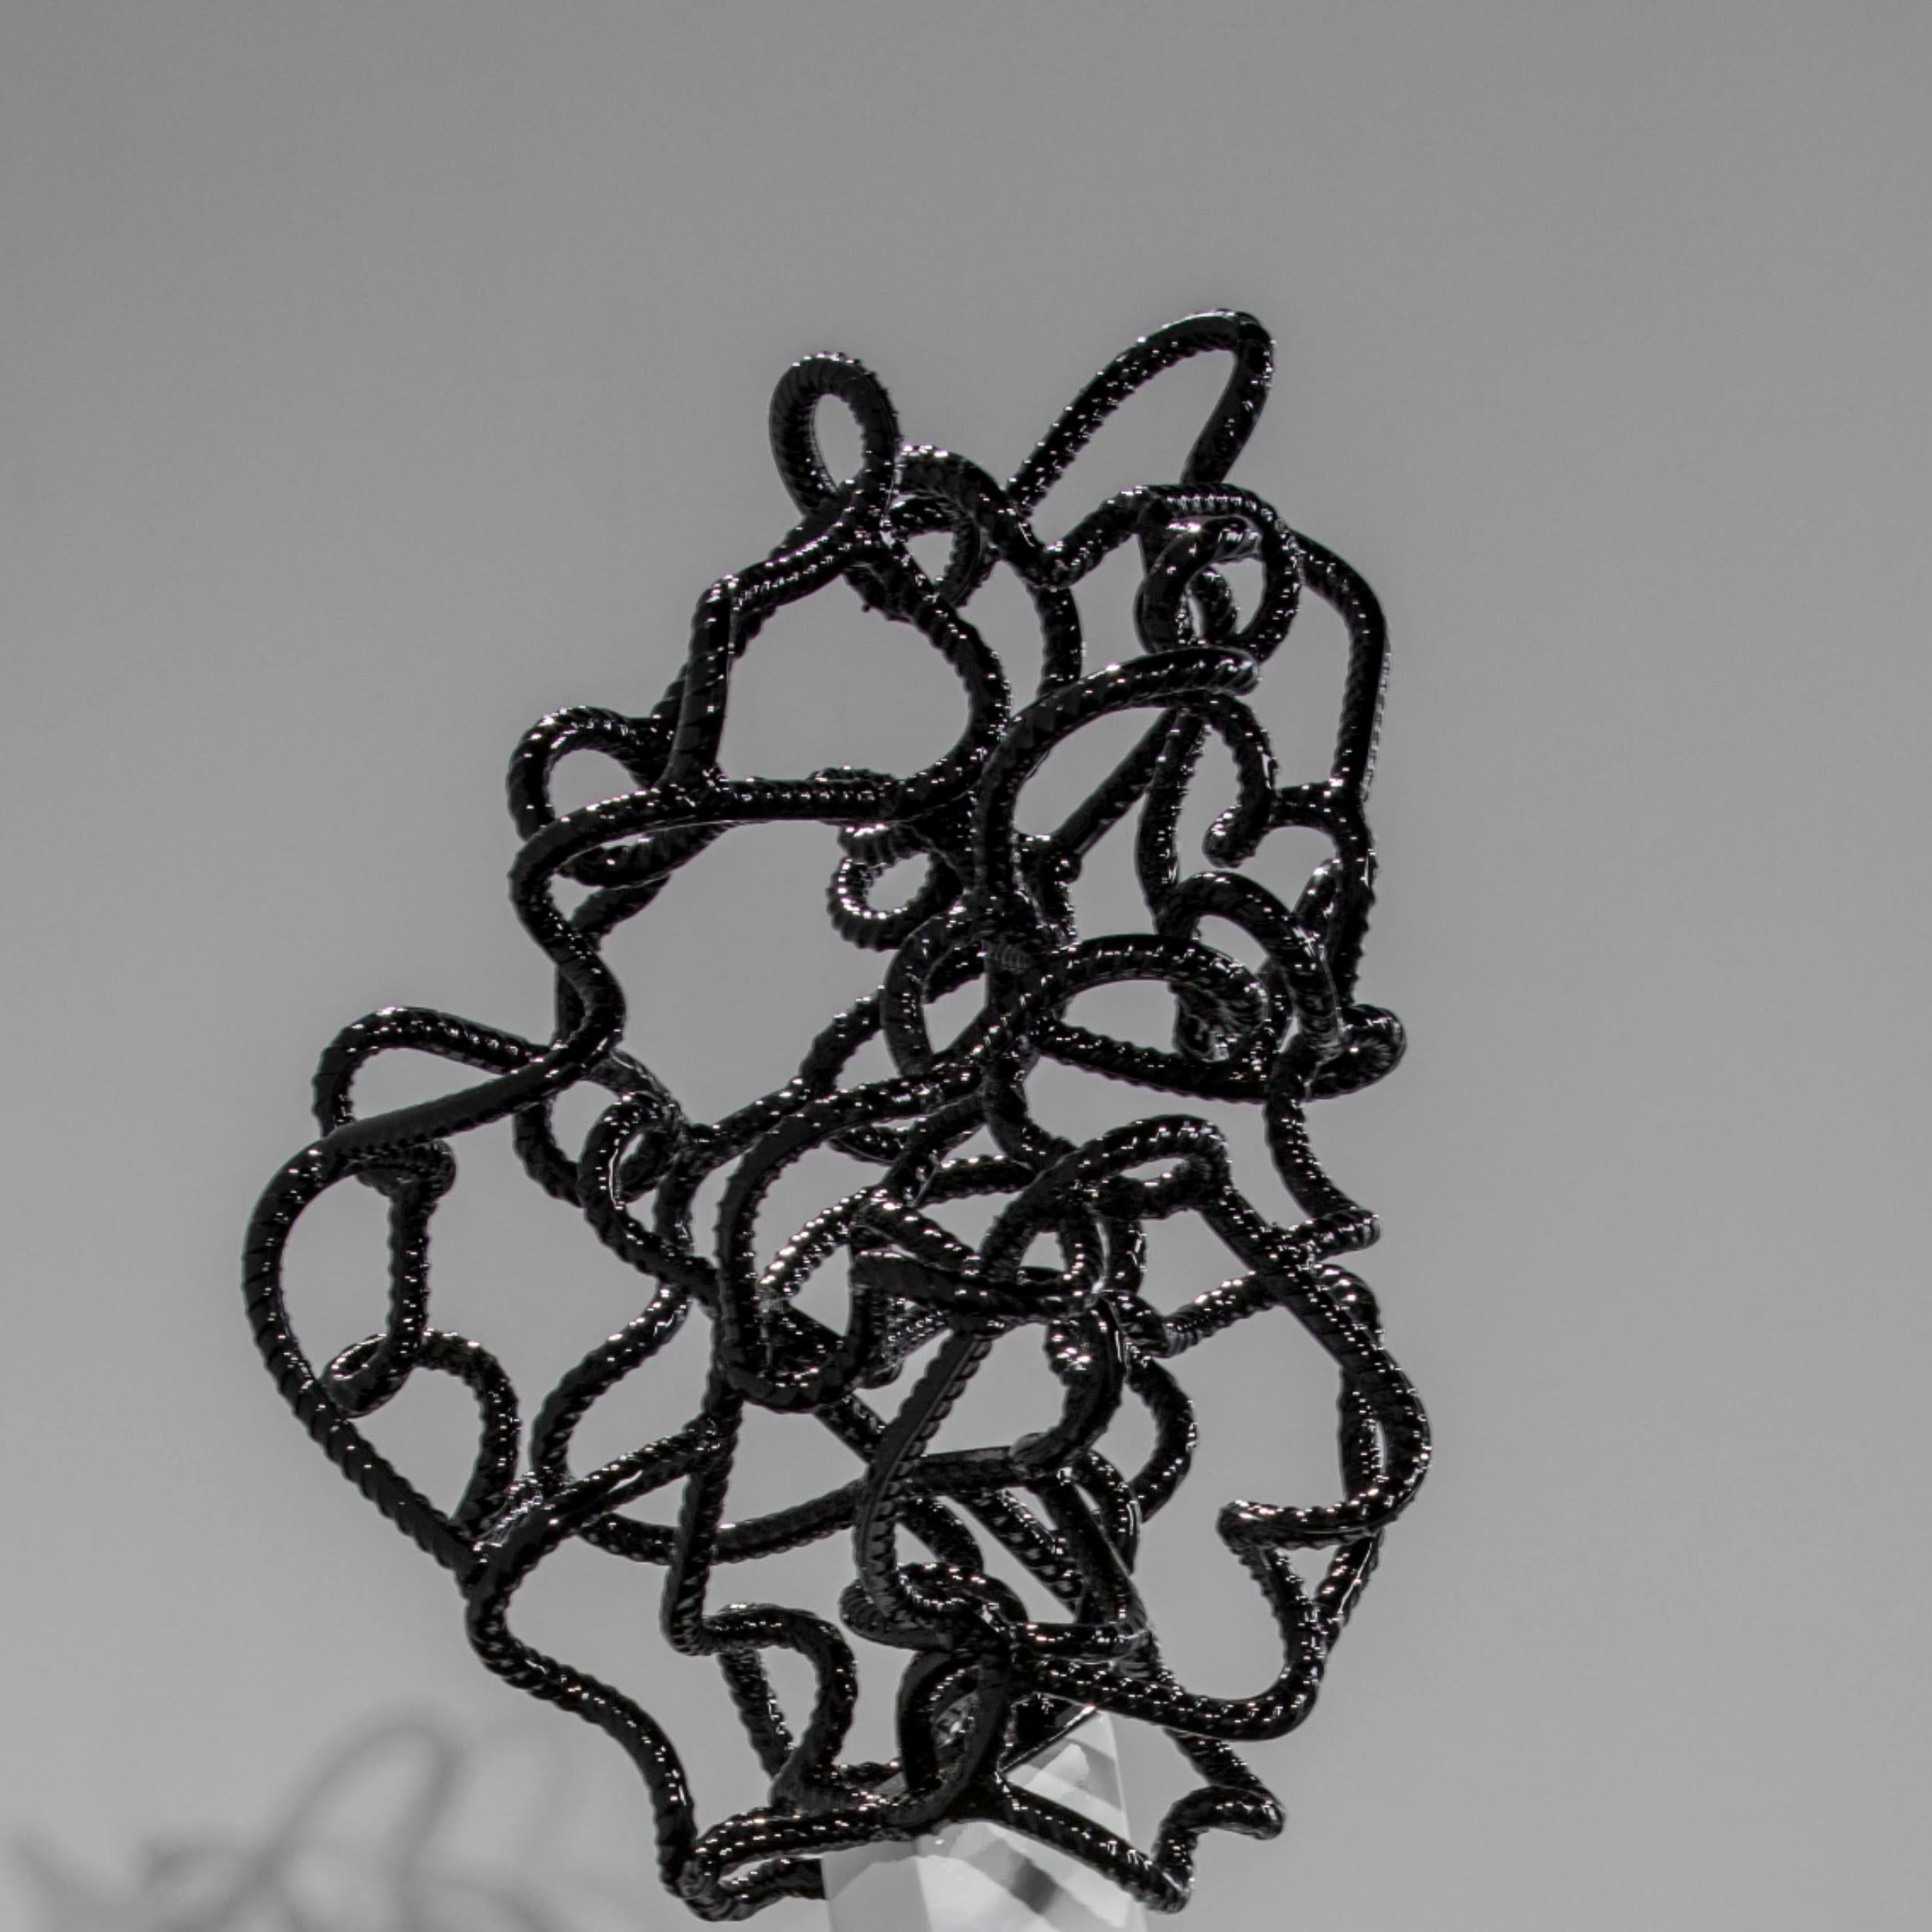 SIGNALE – Sculpture von Morgan Robinson